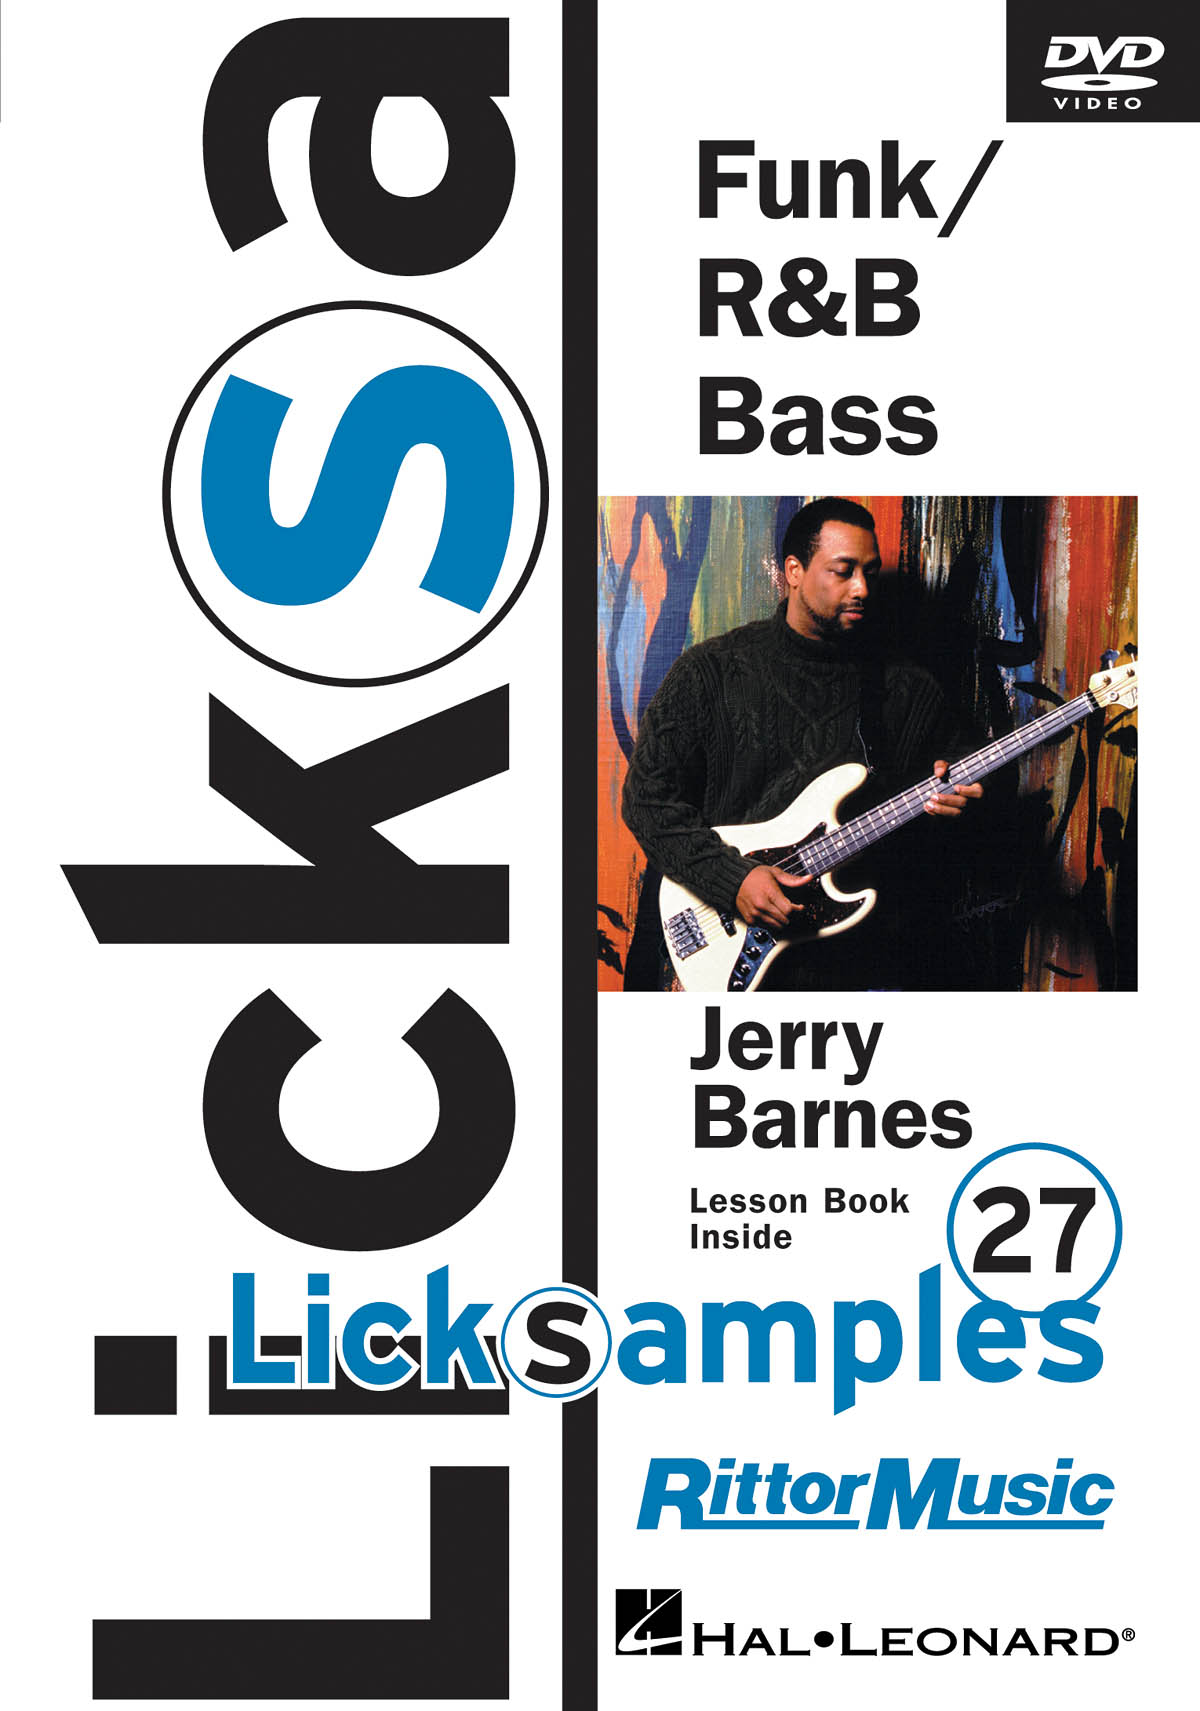 Funk-RnB Bass Lick Samples Dvd